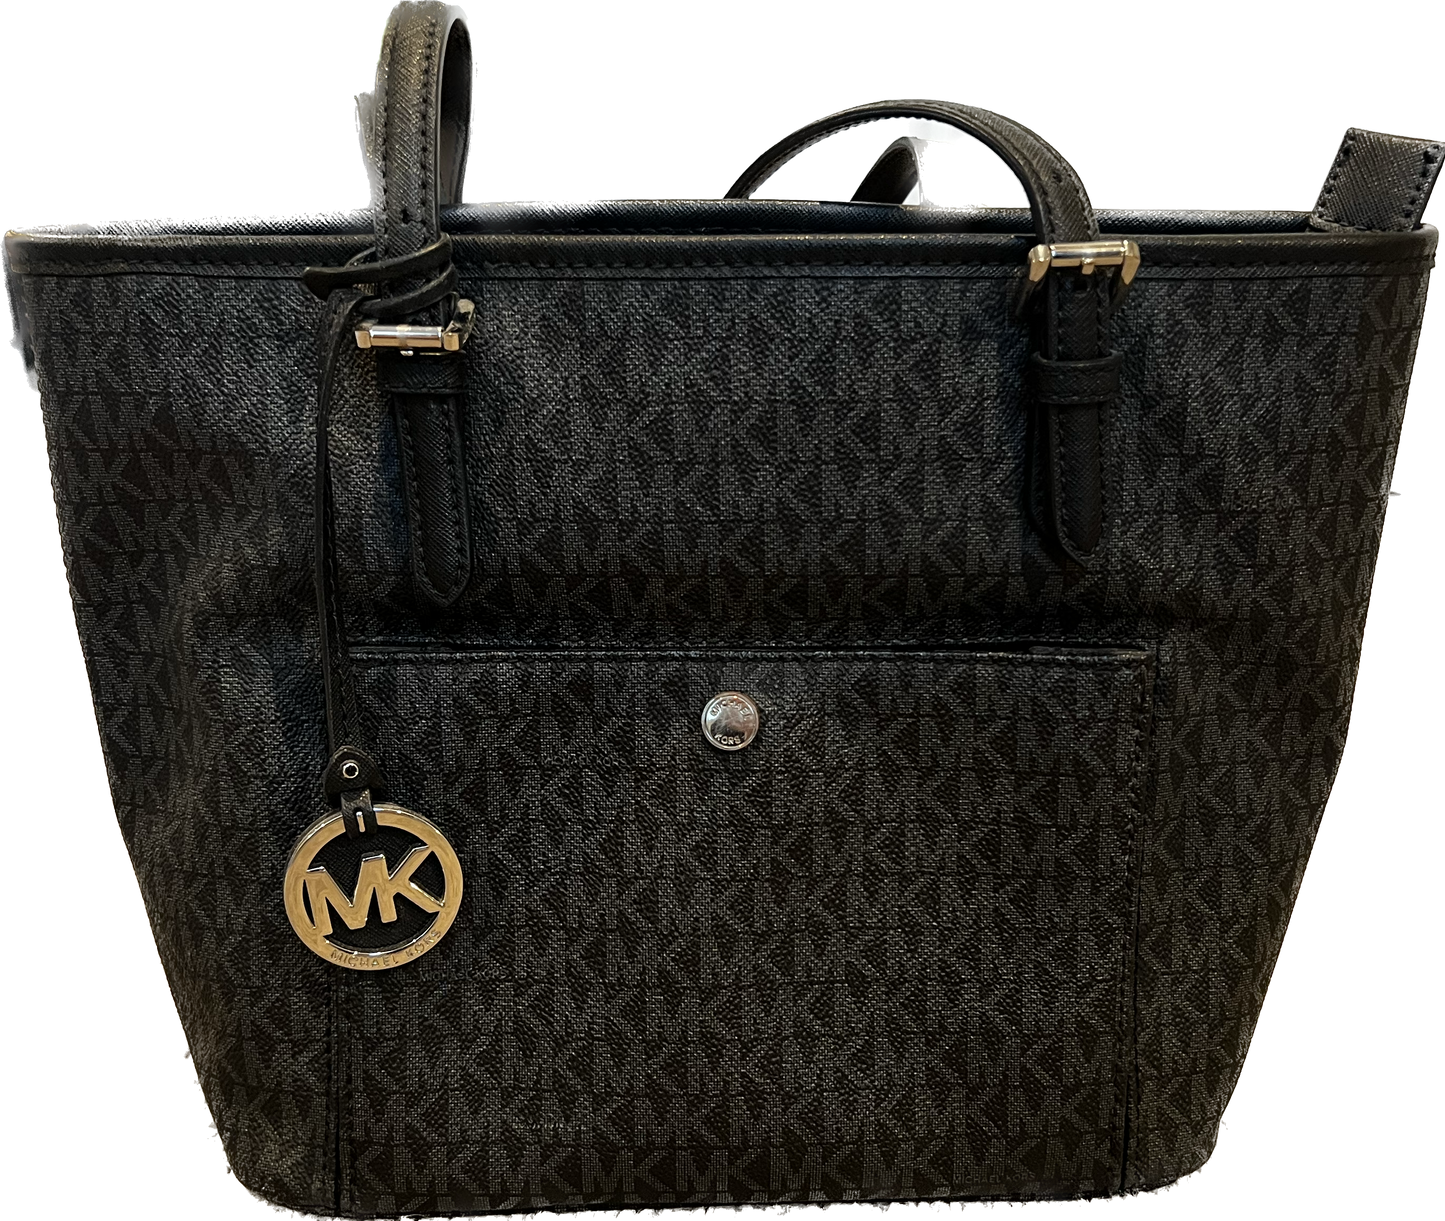 Michael Kors handbag/tote